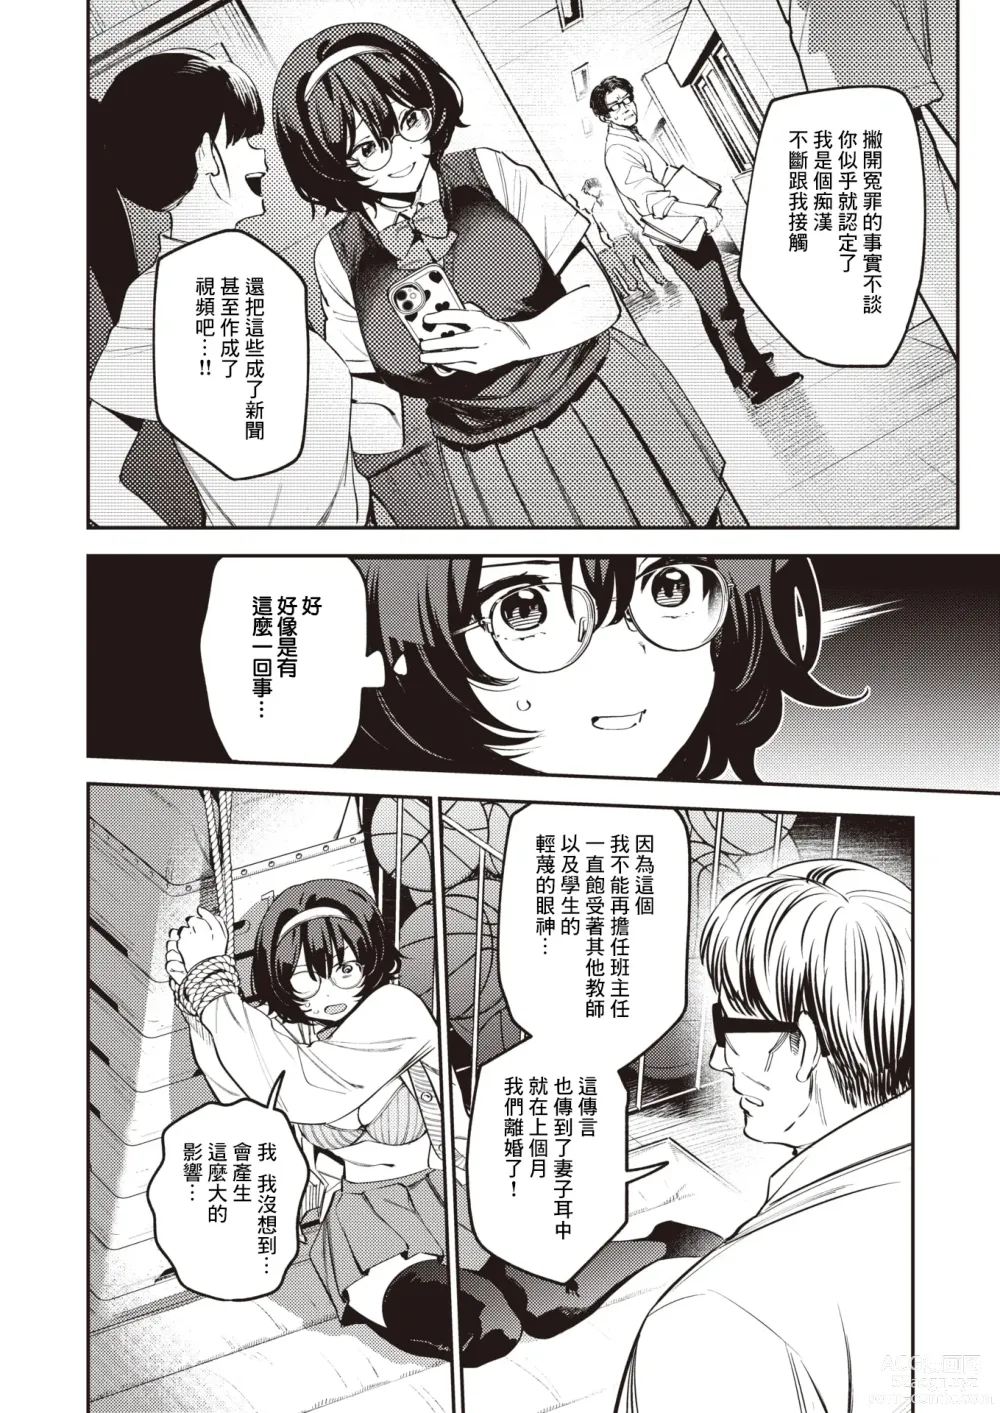 Page 6 of manga Wakarase Filming